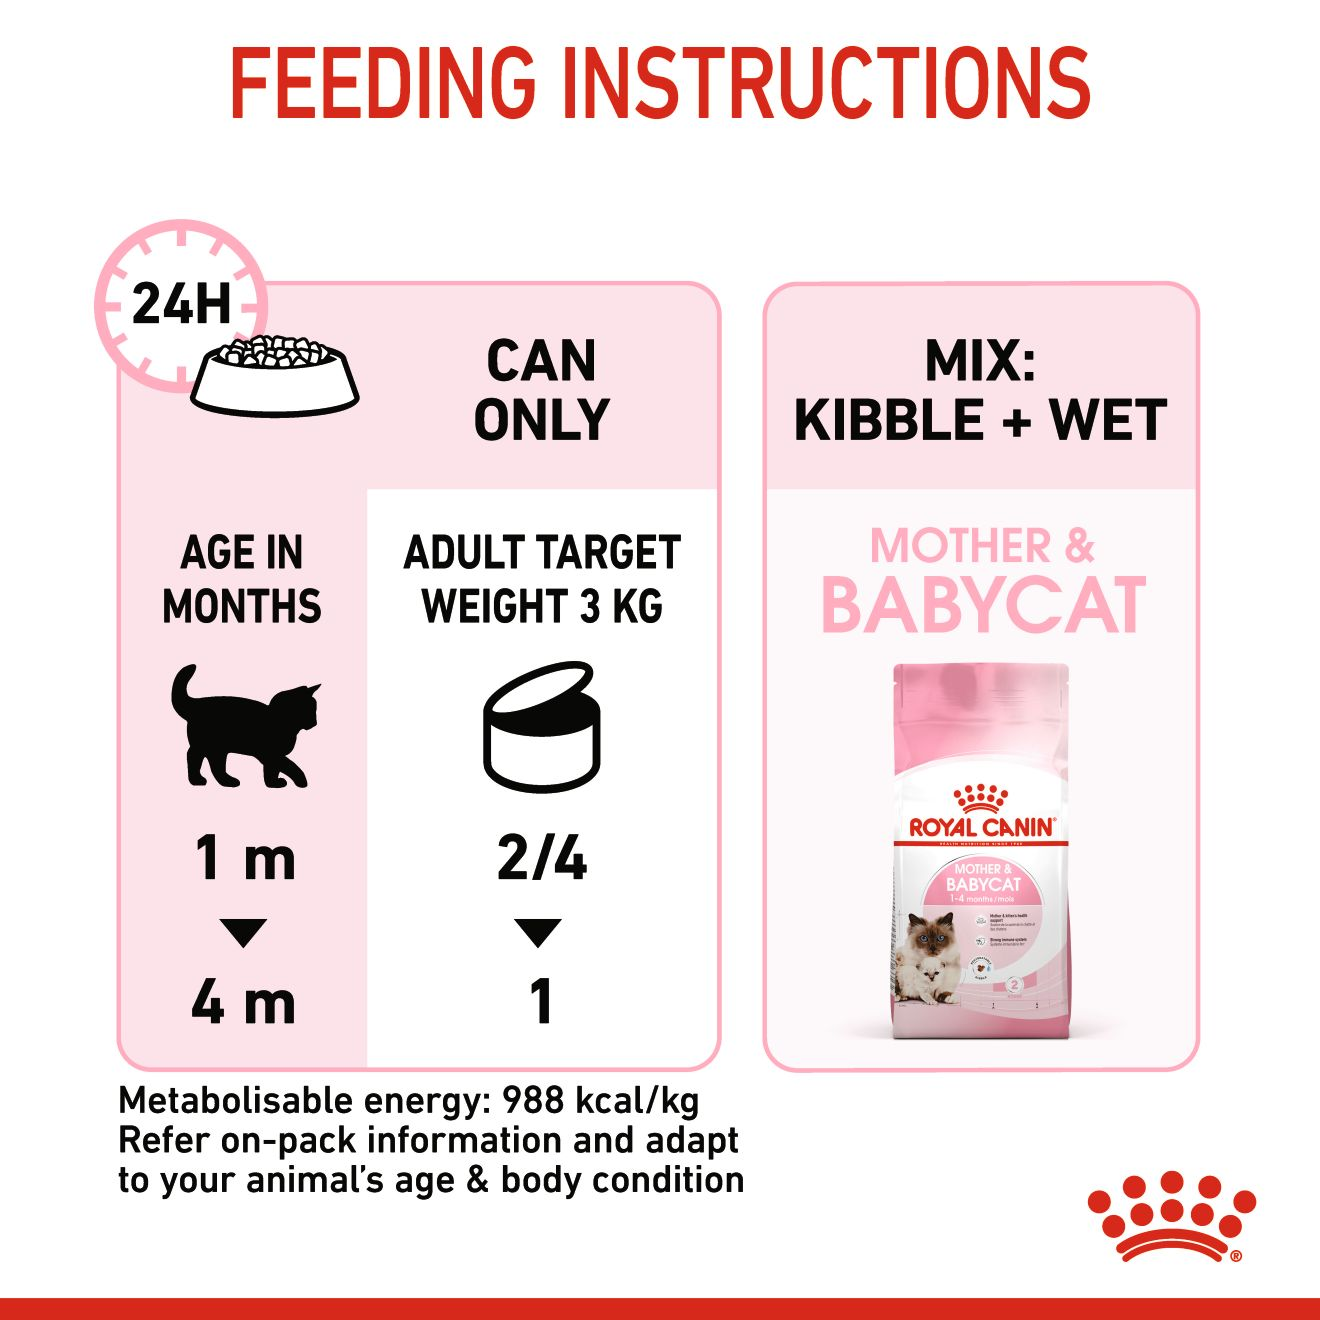 FELINE HEALTH NUTRITION MOTHER & BABYCAT MOUSSE (WET FOOD - CANS)